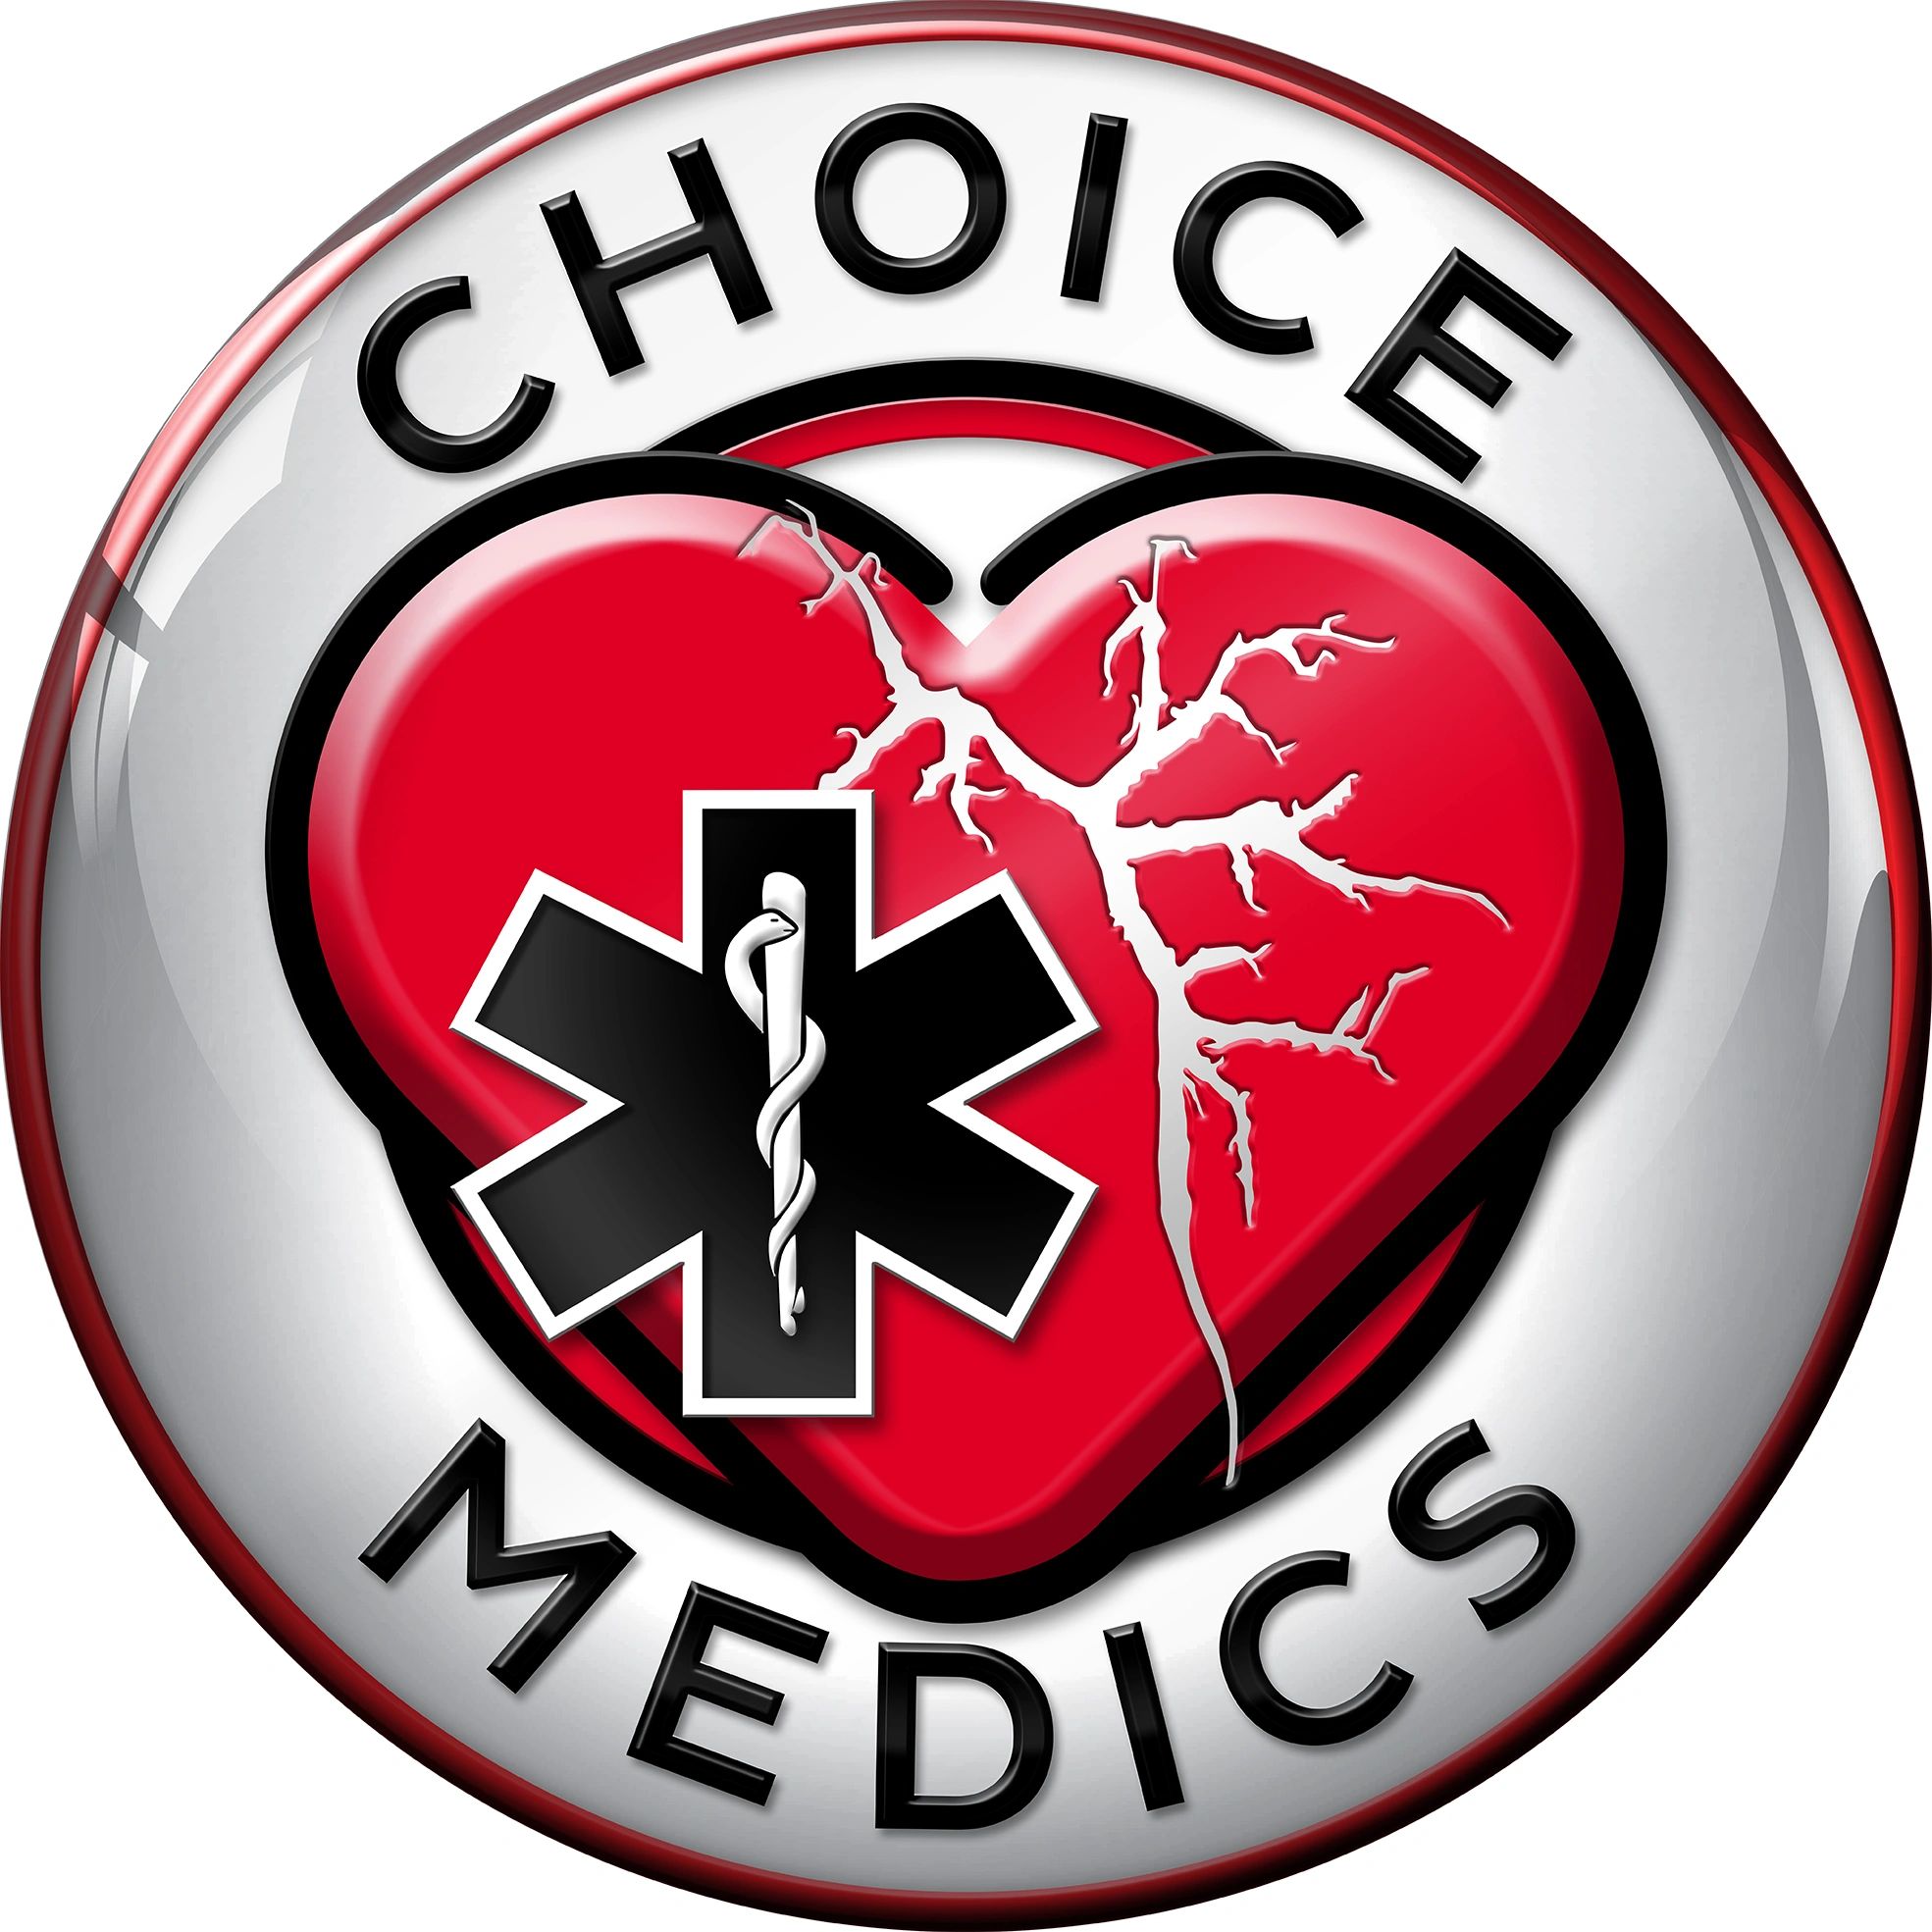 choice medics logo
first aid trainers